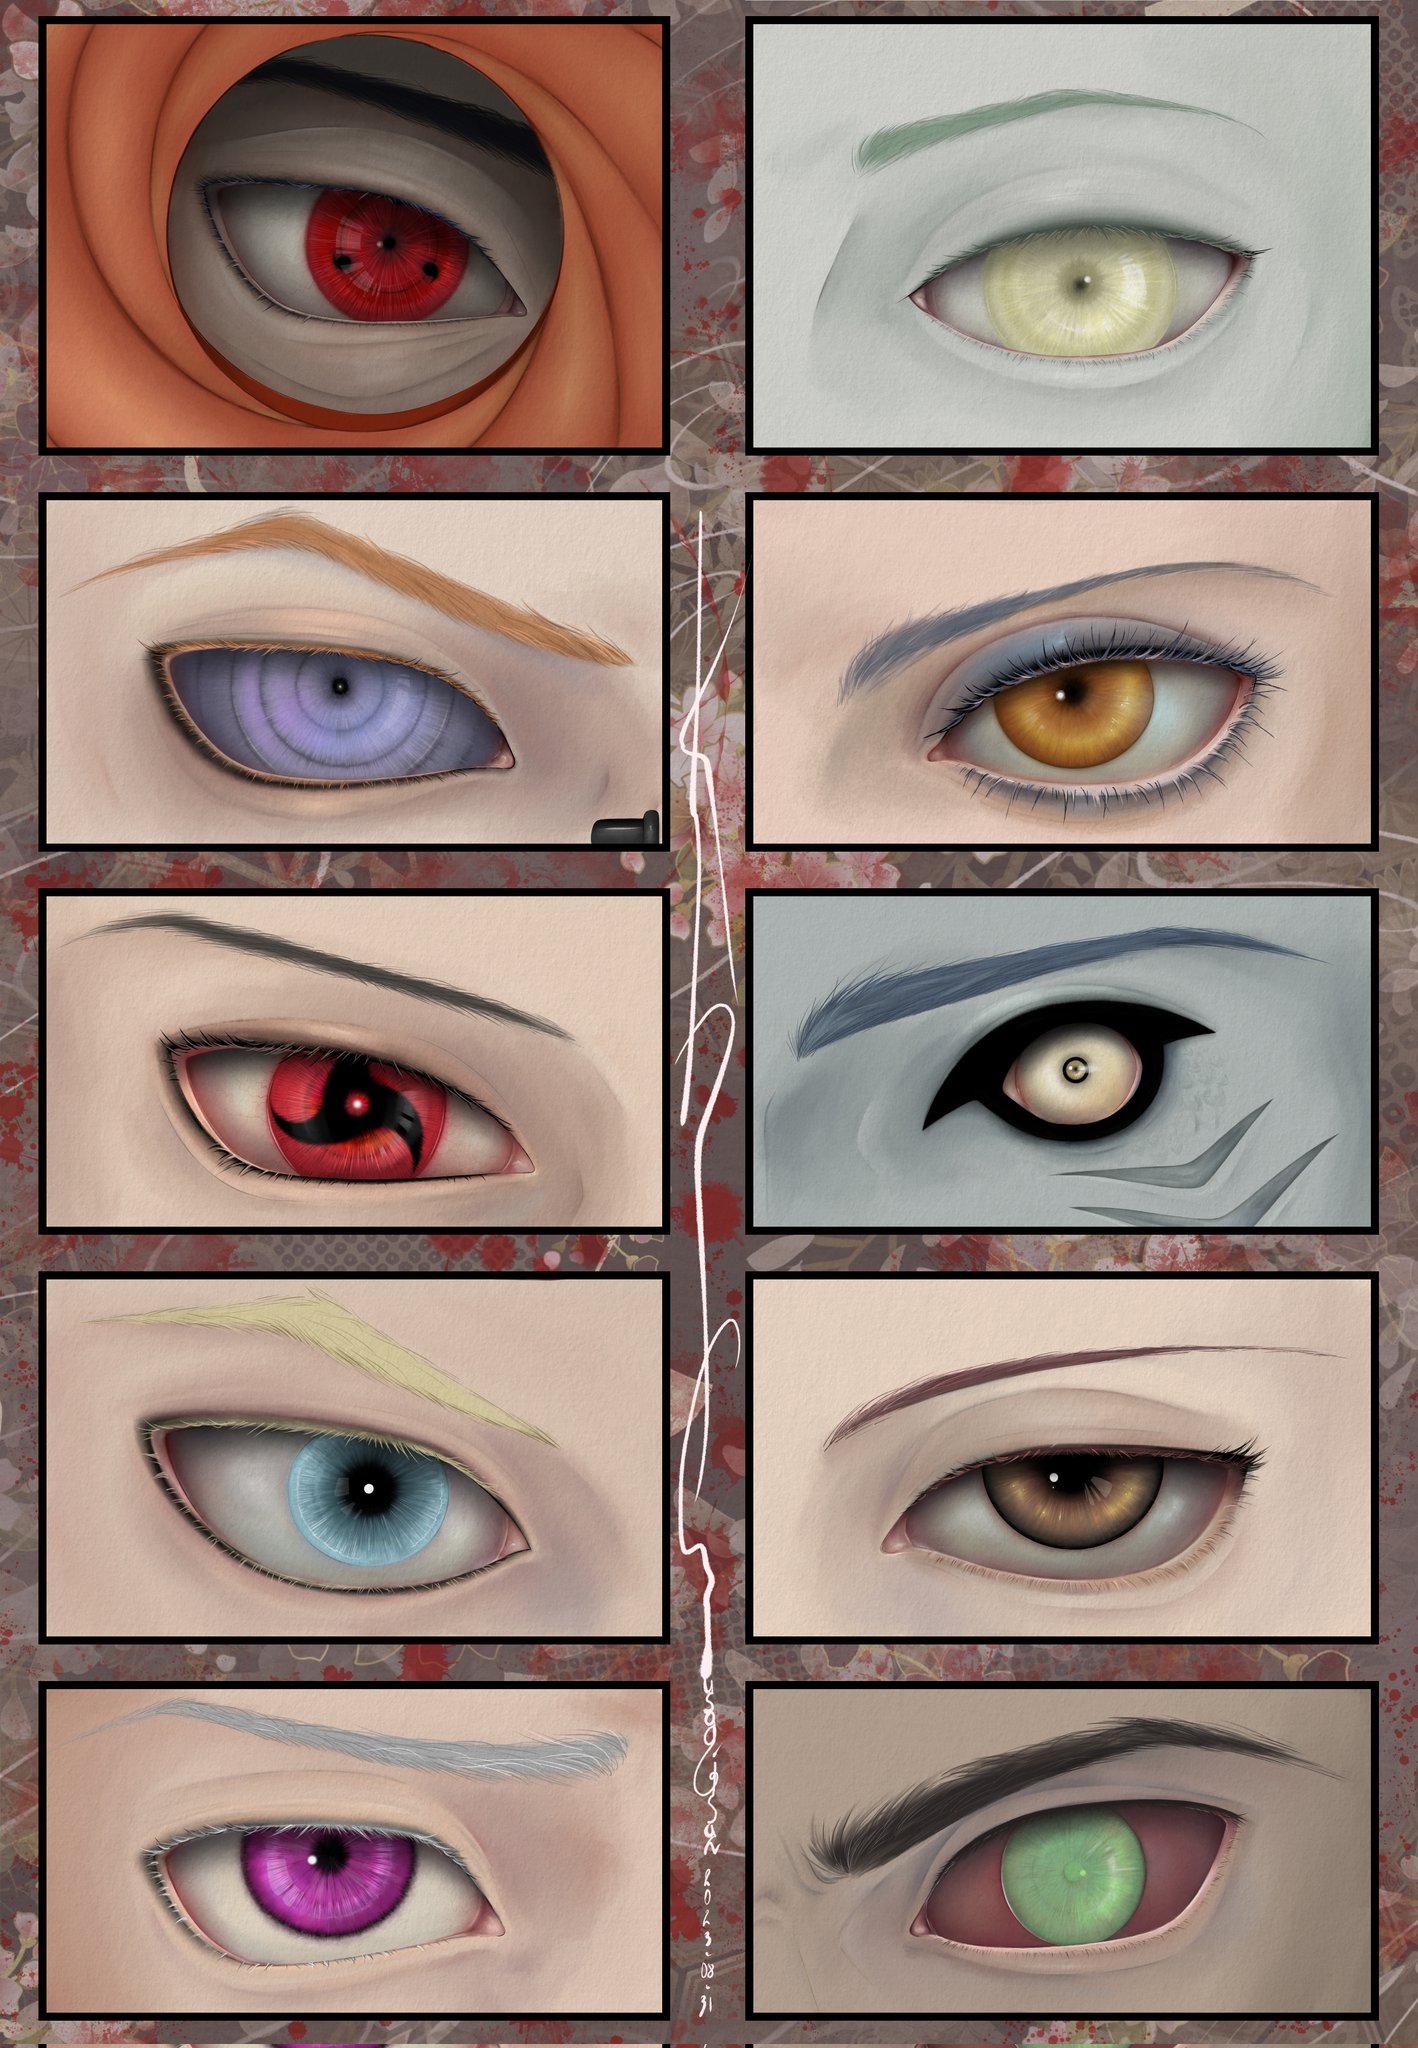 Naruto Character Eye Chart